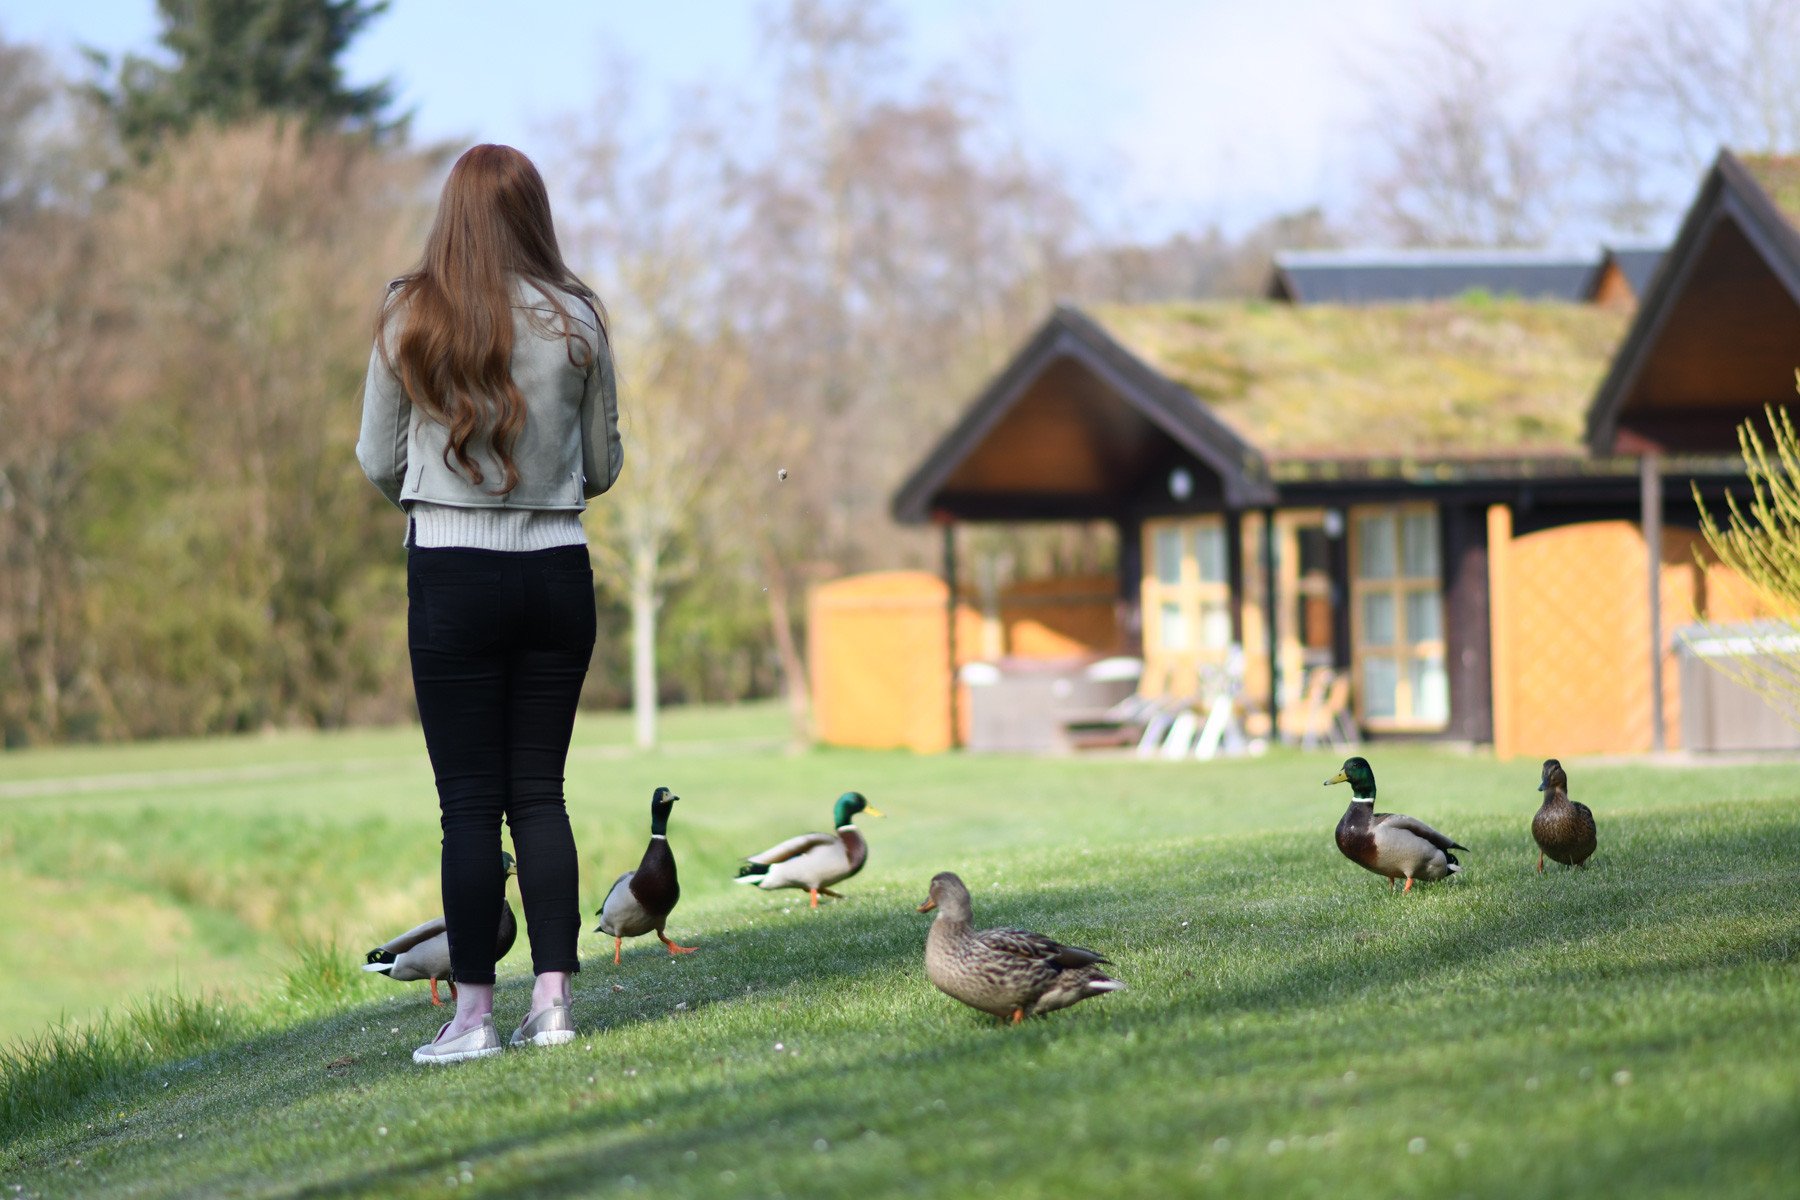 Feeding the ducks at Loch Lomond, Scotland